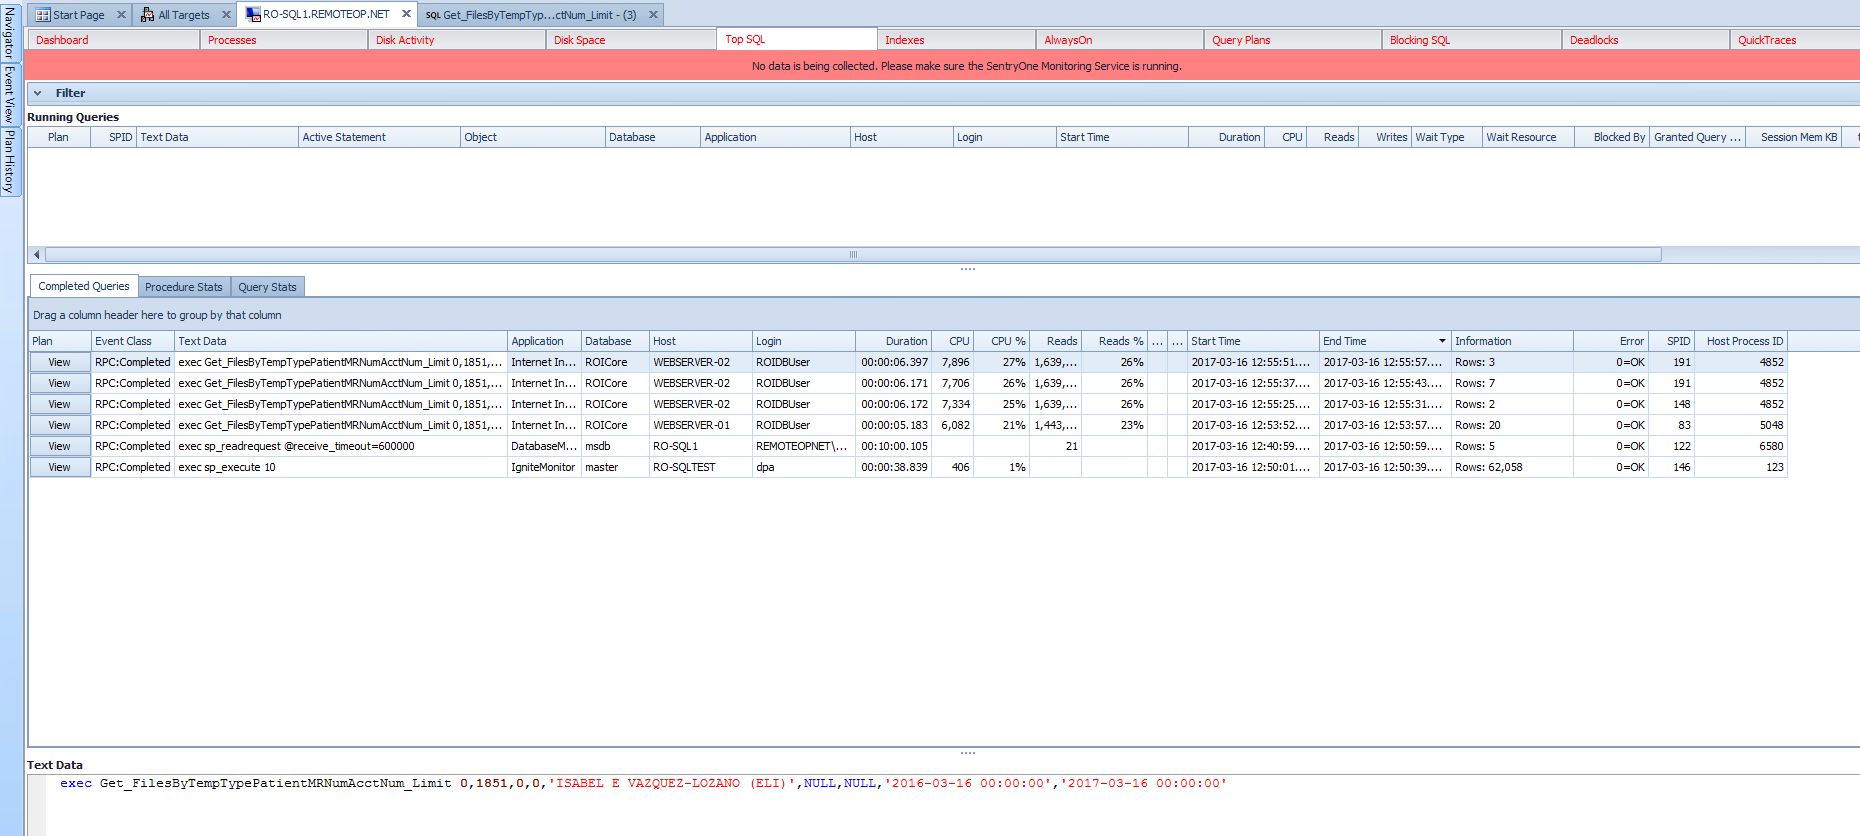 Merits of a SQL Server Performance Analyzer vs. Performance Monitor(s